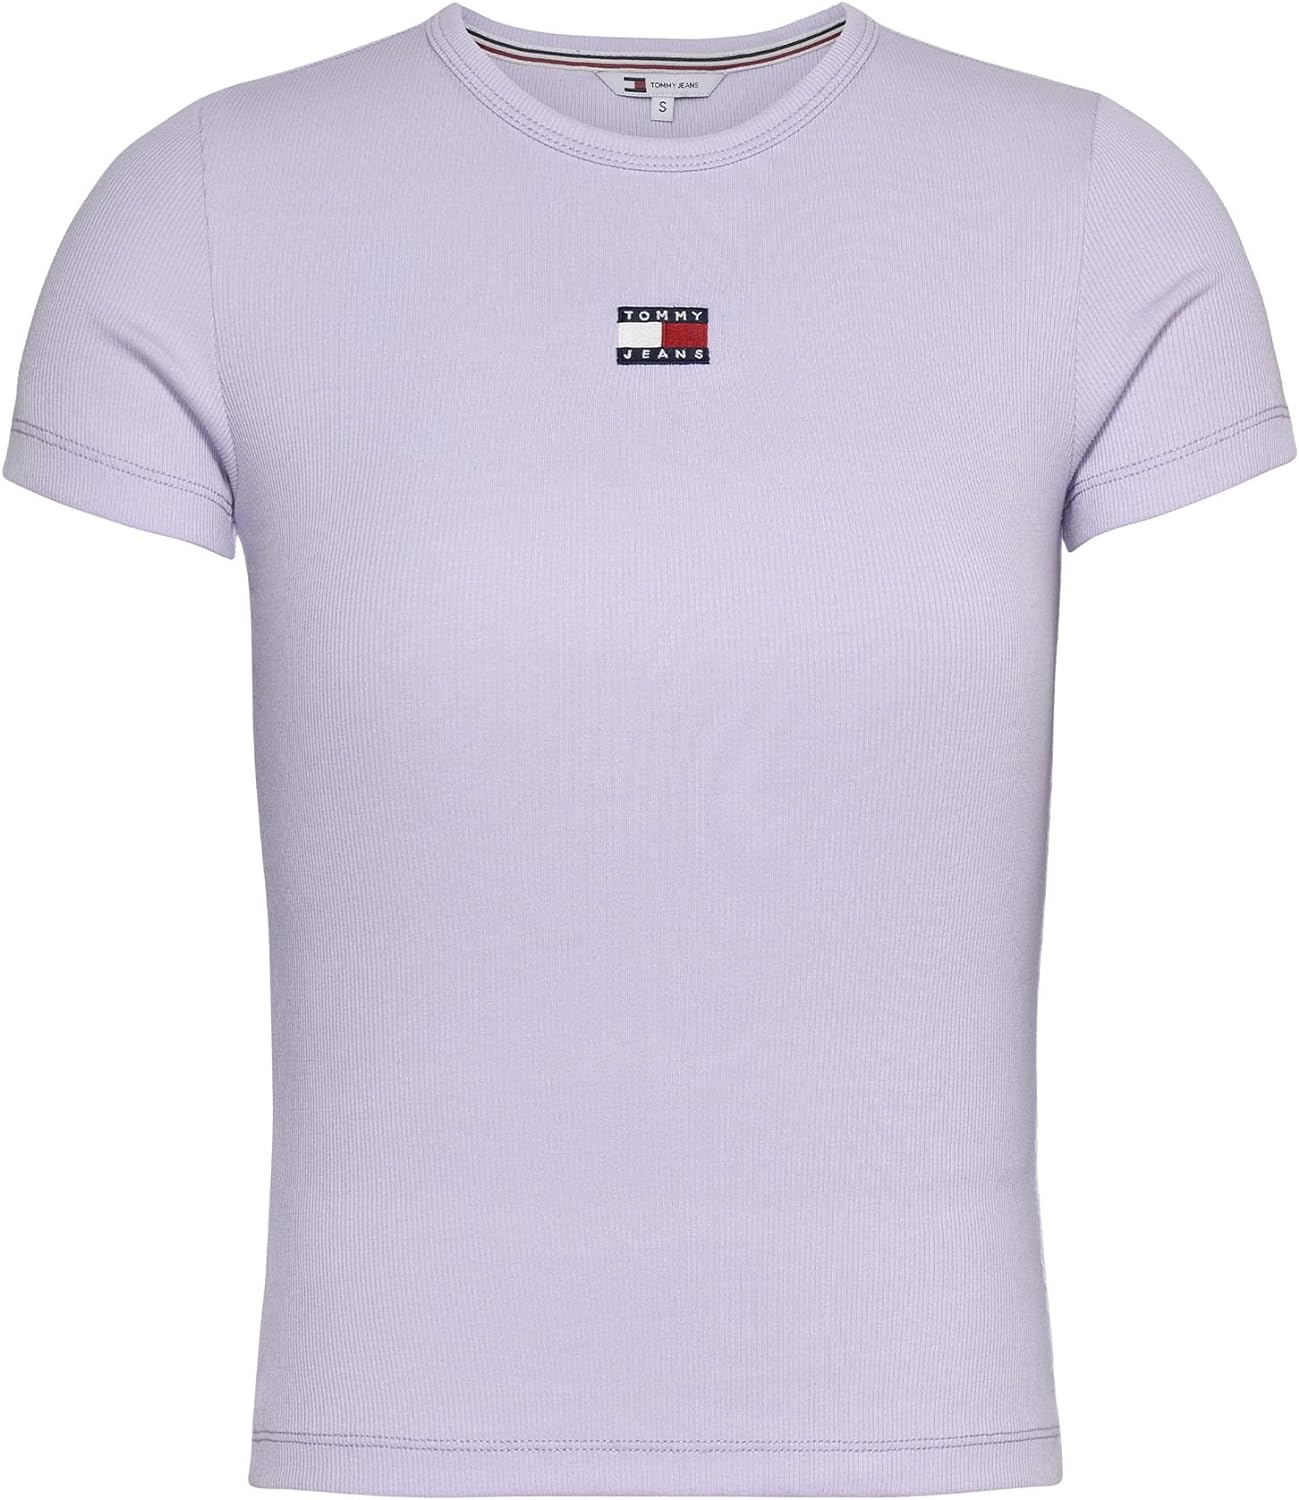 TOMMY HILFIGER T-shirt Donna - Lilla modello DW0DW17881